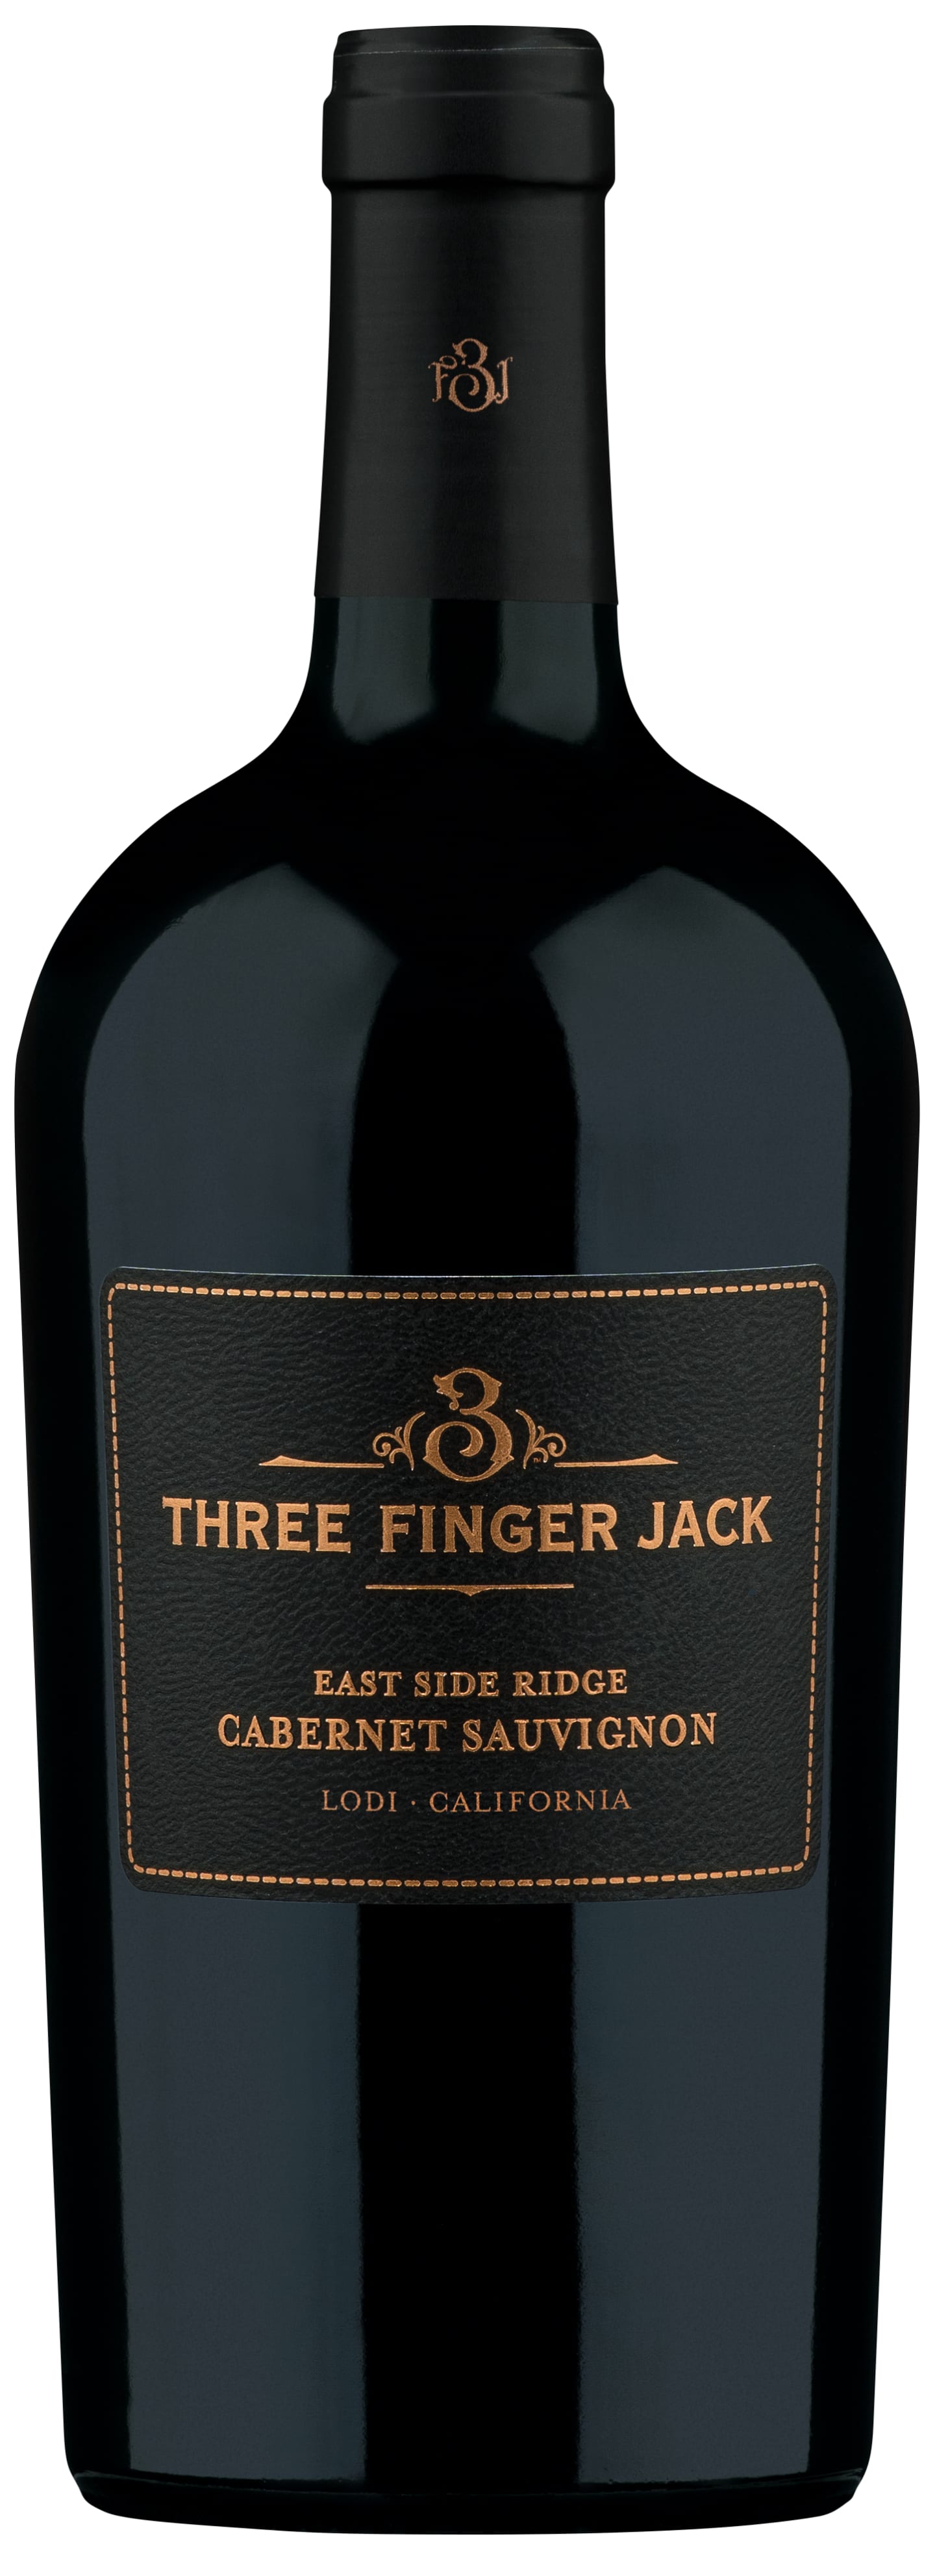 Three Finger Jack Cabernet Sauvignon 2018